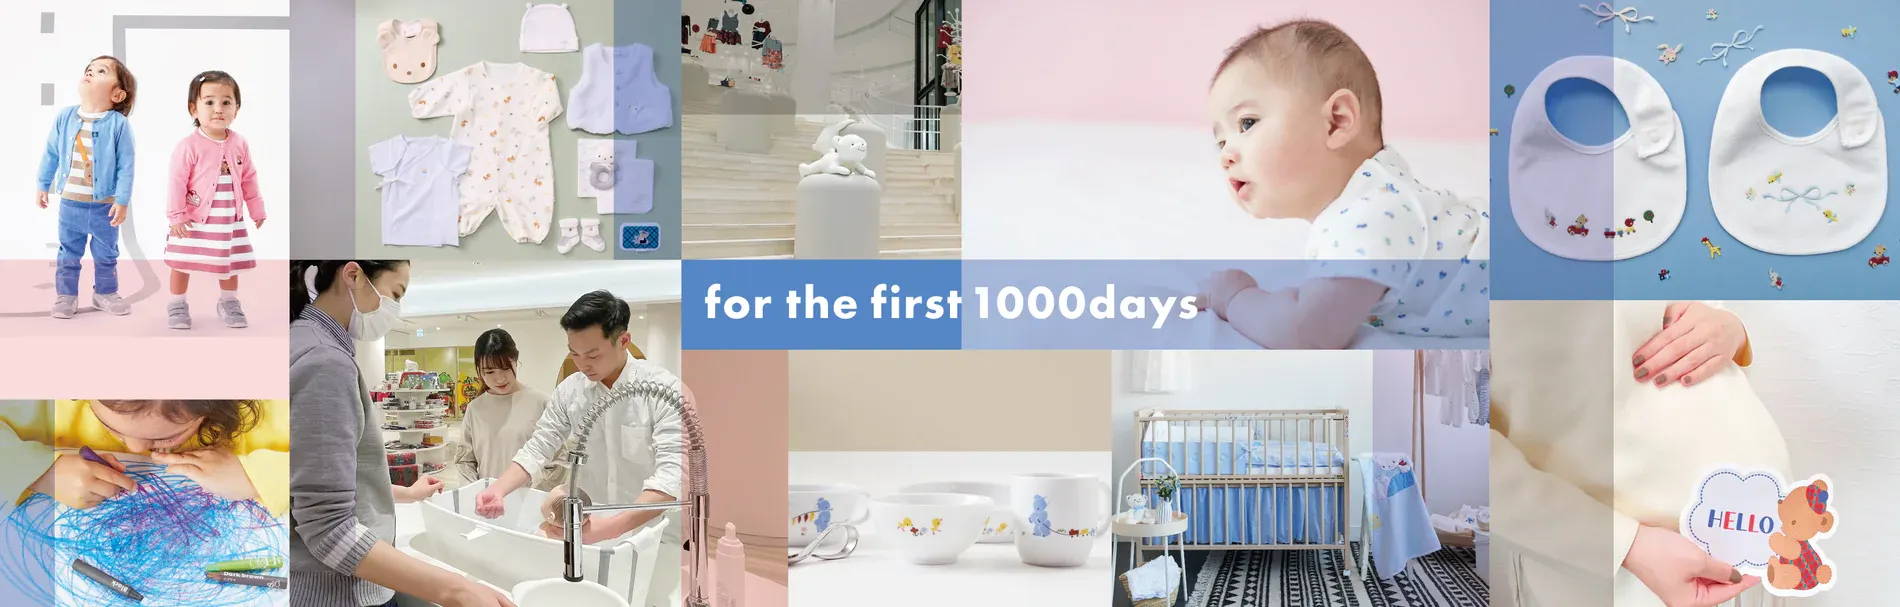 1000days_preparation | ファミリア公式サイト